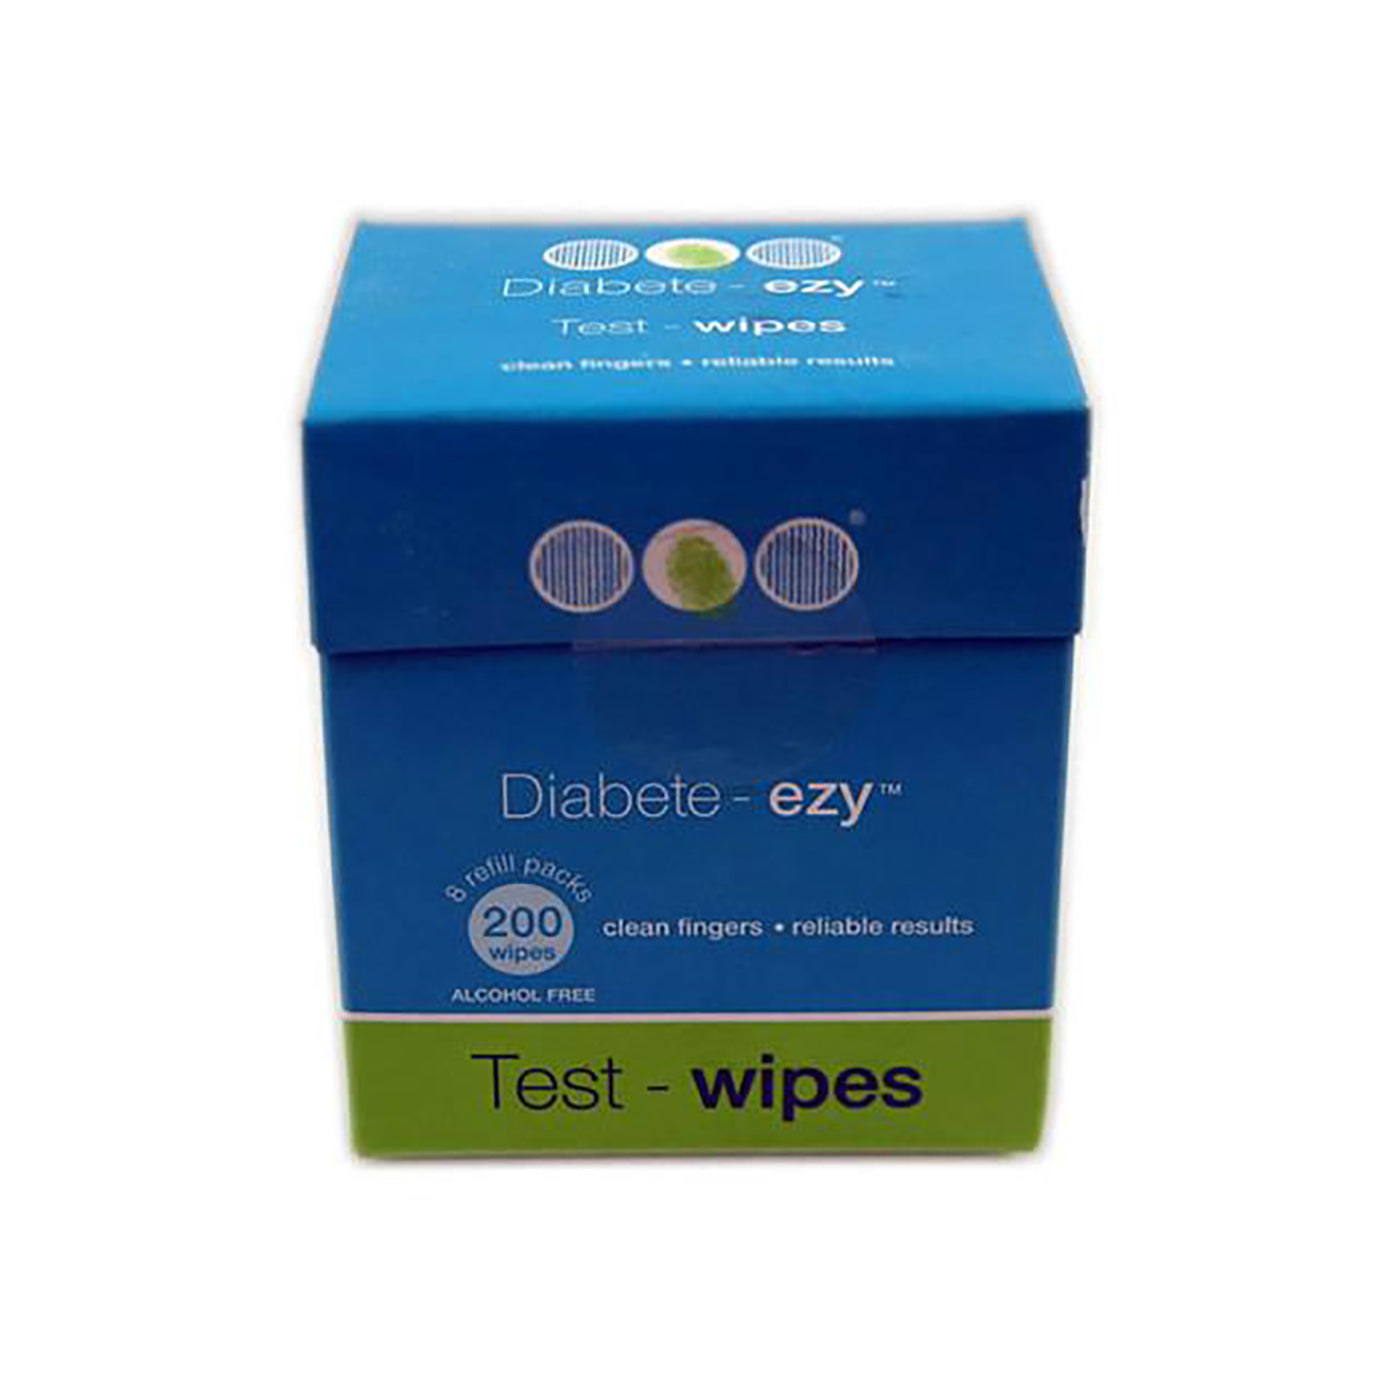 Box Of Diabete-ezy Refill Pack Test Wipes